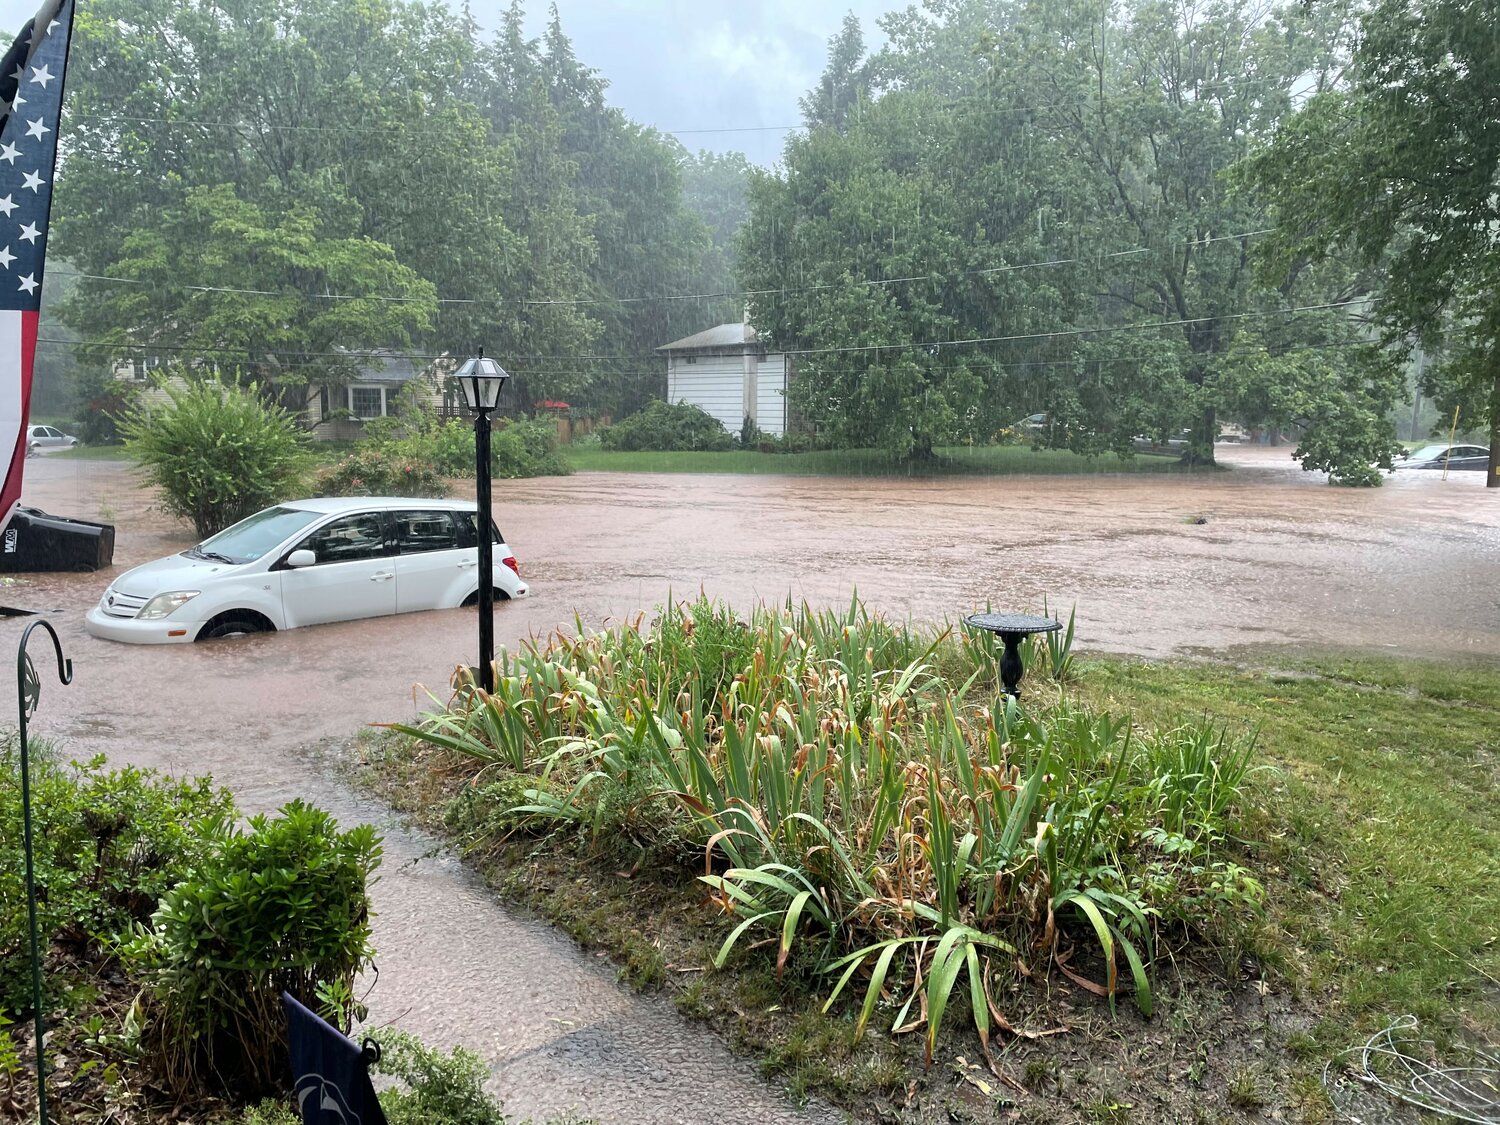 July 15 flooding near the Delaware River in Bucks County hit a residential neighborhood off Taylorsvile Road just below the Scudder Falls Bridge hard.